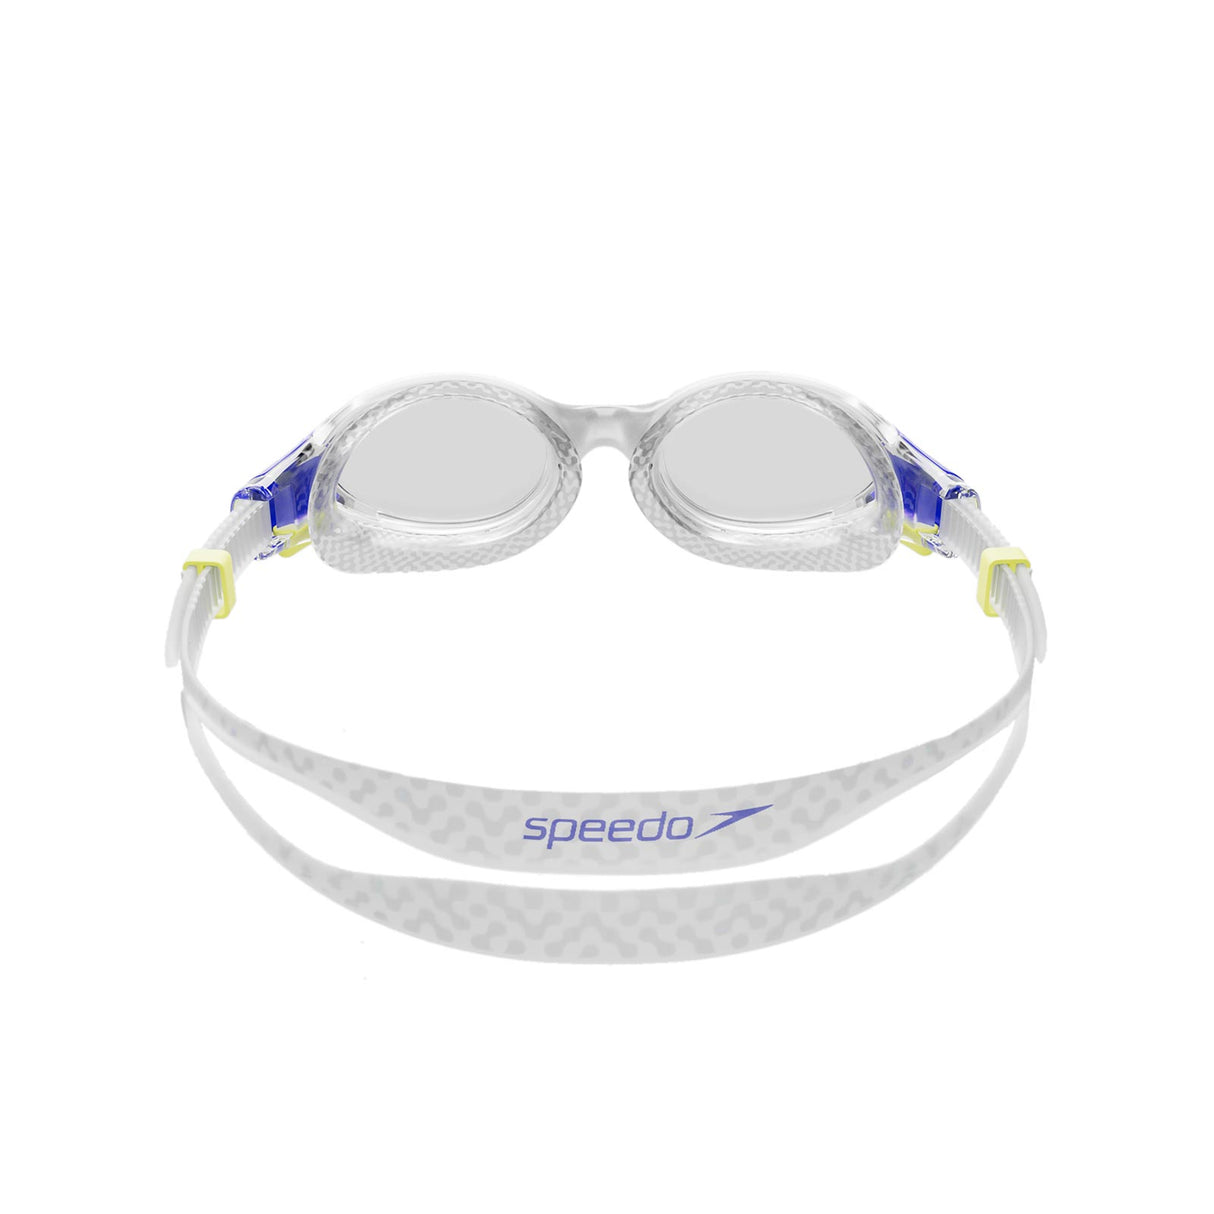 Speedo Biofuse 2.0 Kids Goggles